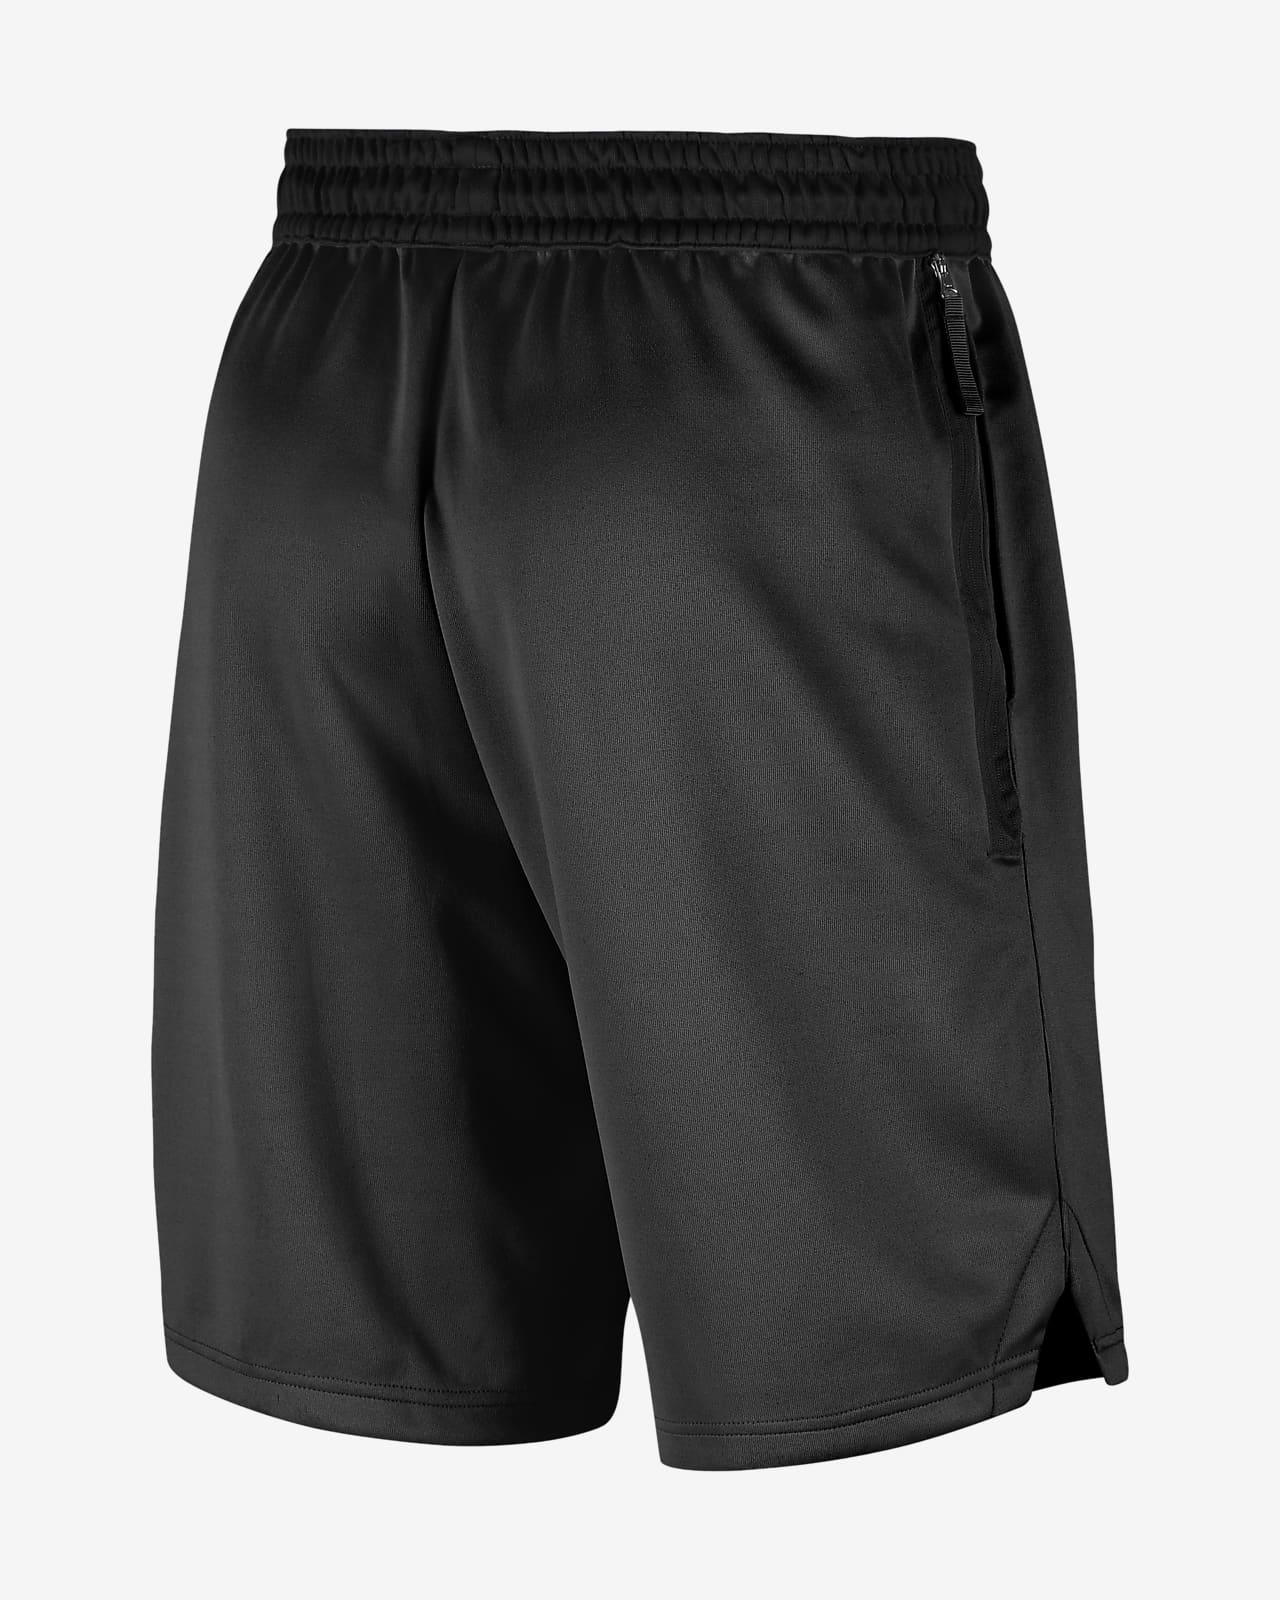 Shorts de básquetbol para hombre Nike Dri-FIT Spotlight. Nike.com